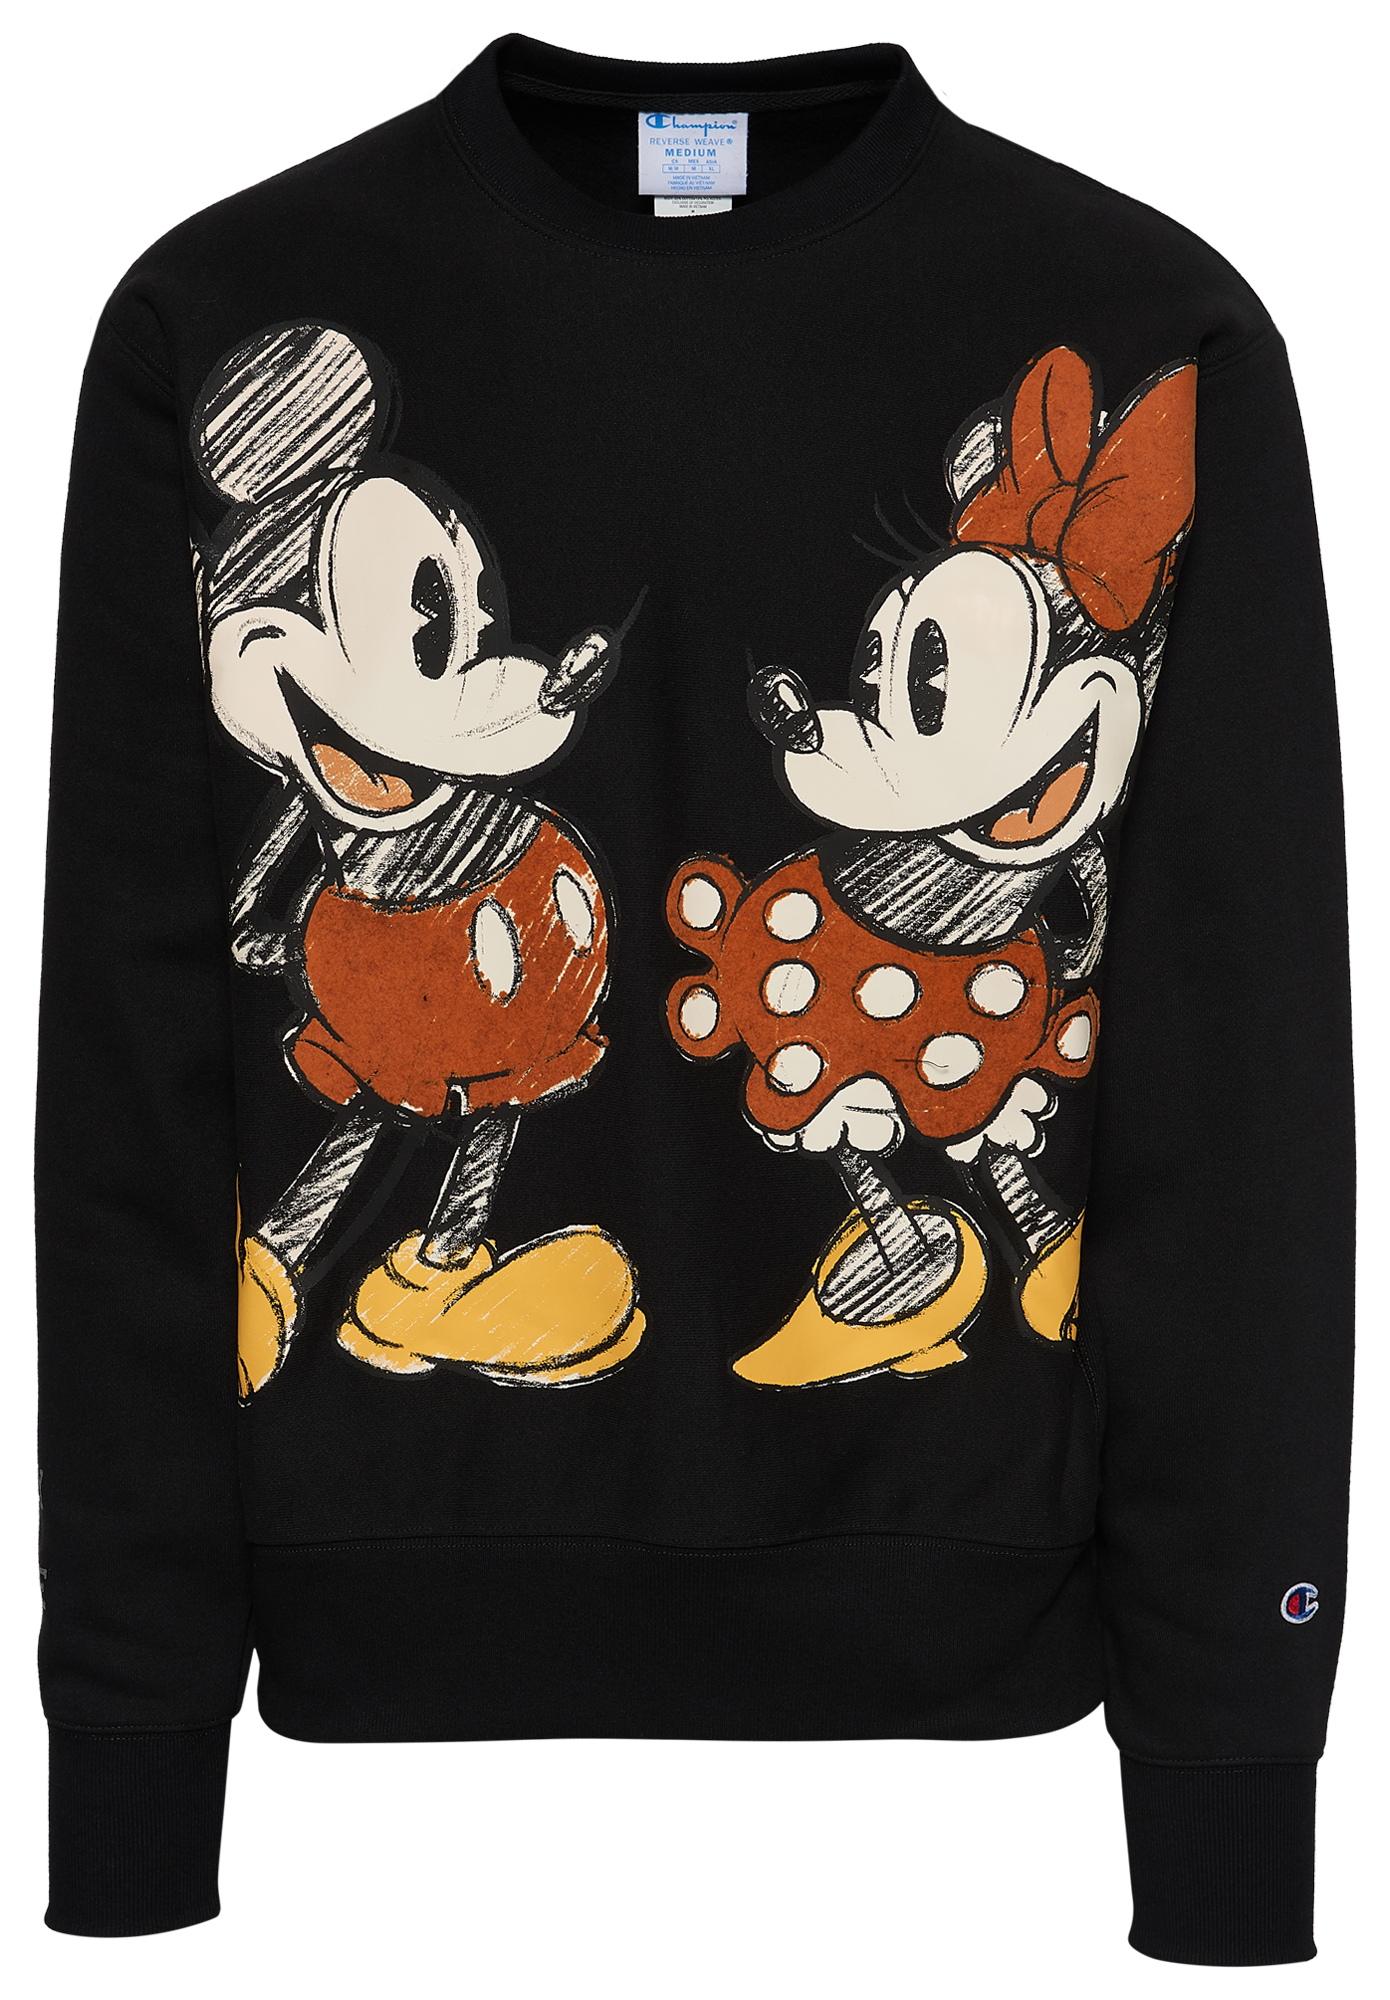 Champion Reverse Weave Disney Sweatpants Men Medium Mickey Mouse Graphic  Joggers